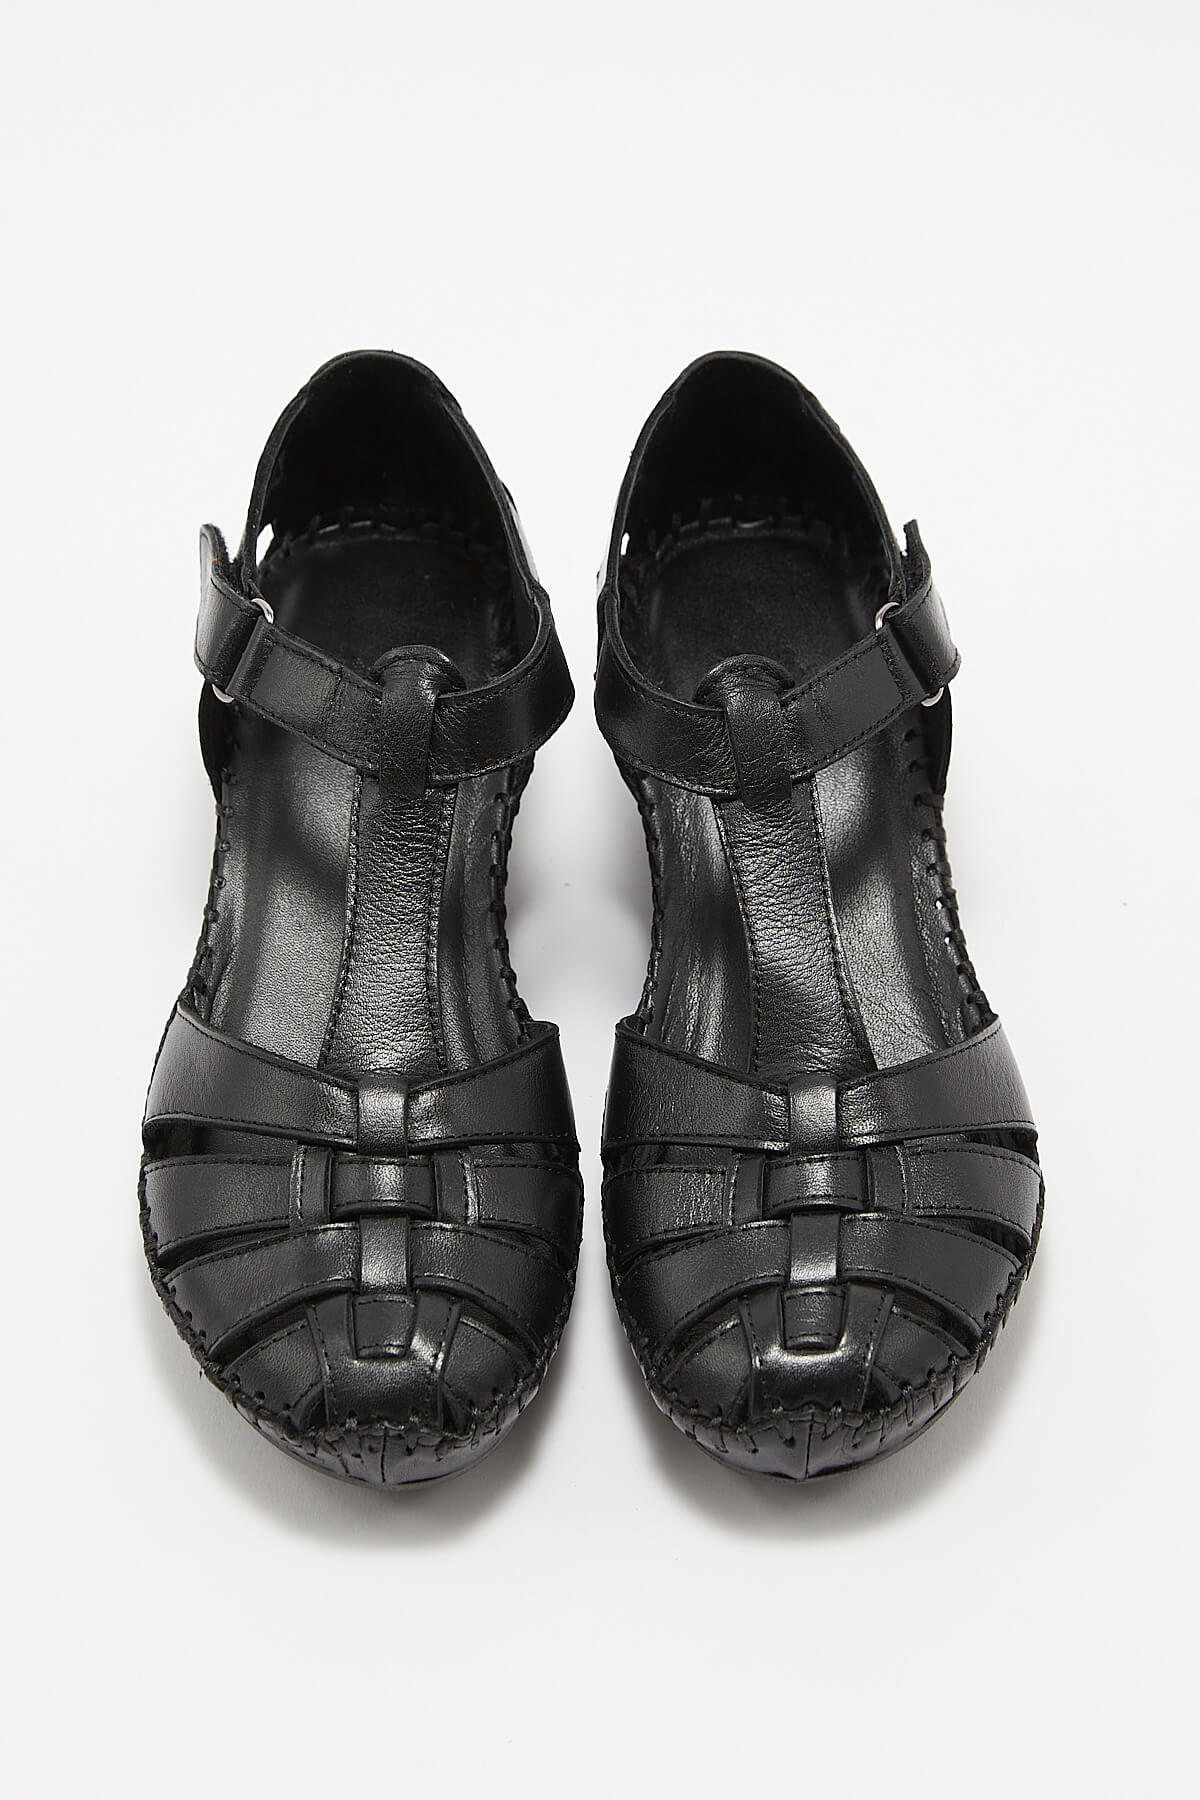 Kadın Comfort Deri Sandalet Siyah 18791382 - Thumbnail